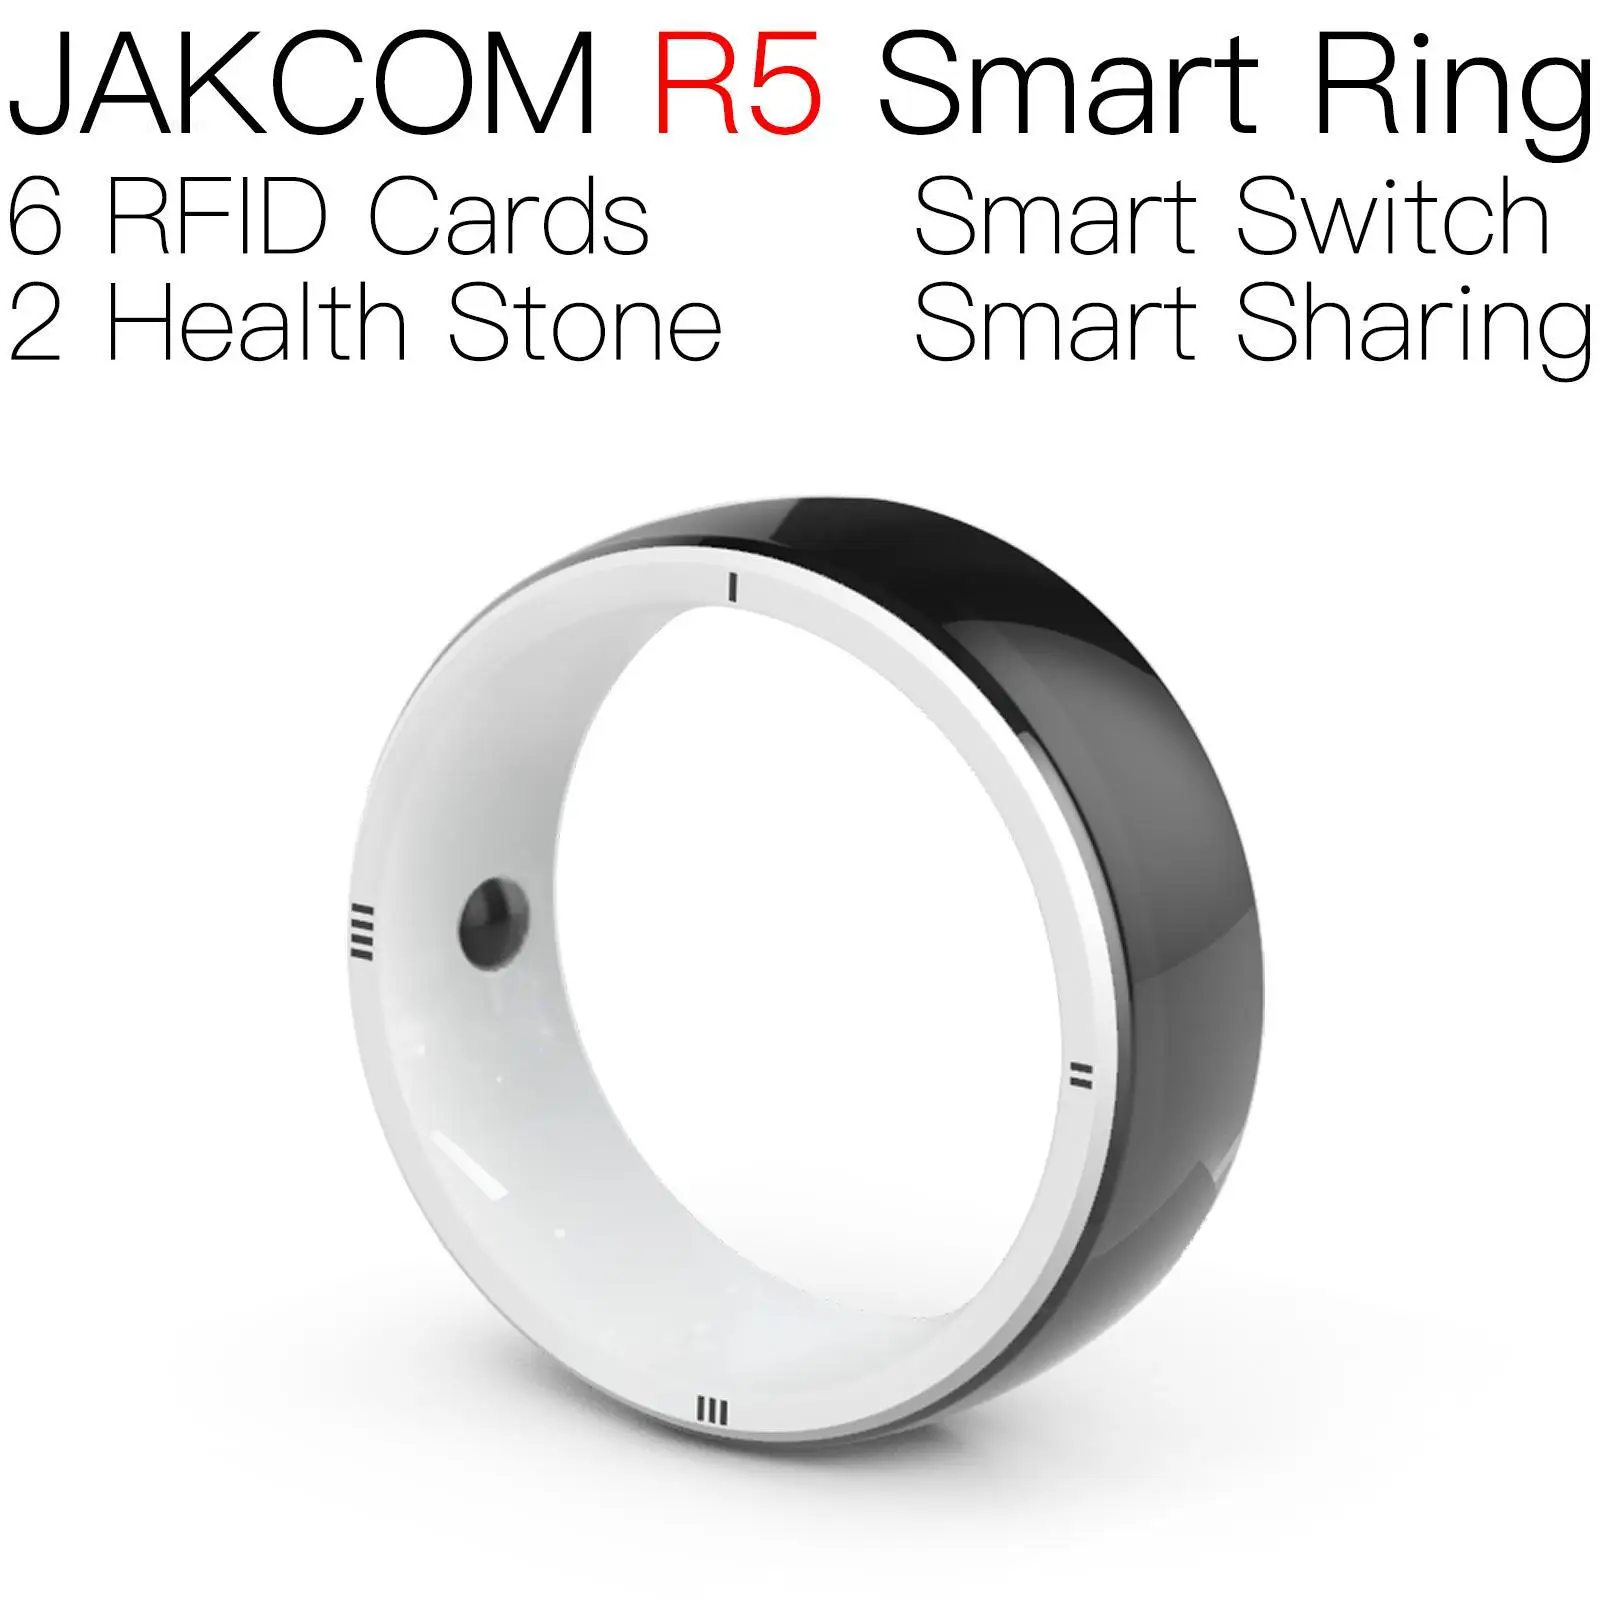 

JAKCOM R5 Smart Ring better than american express black card assorted pwm ic reloading duplicator key dual 125khz rfid writable